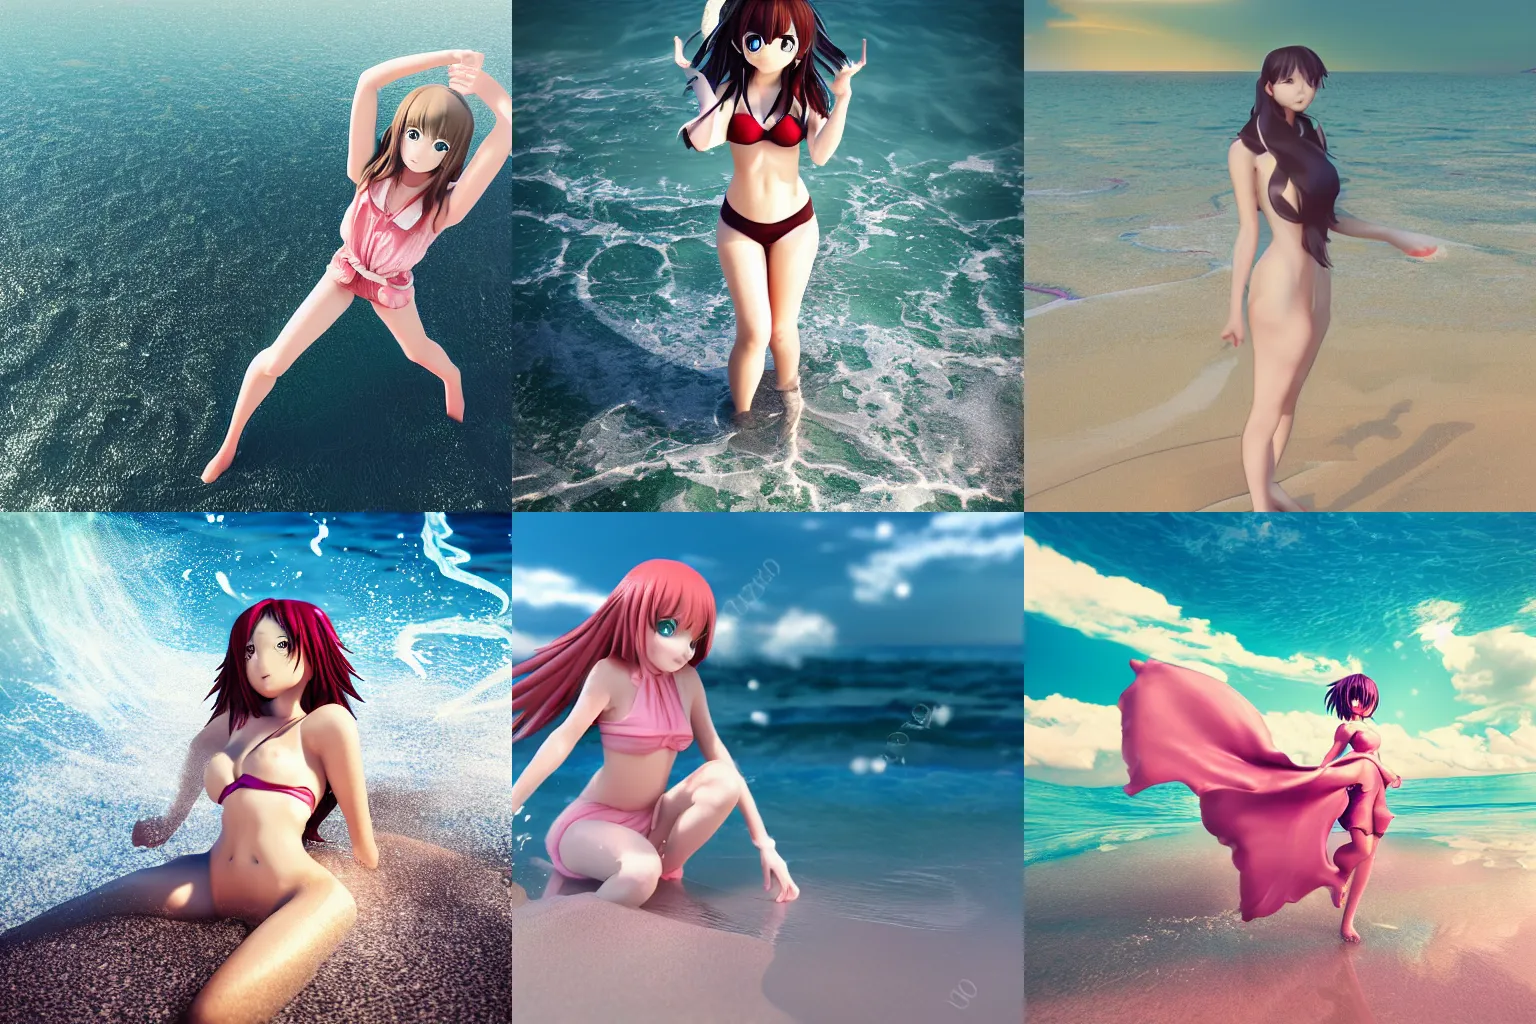 Prompt: anime girl 24yo fotoshoot on the beach octane render symmetric waves splashing